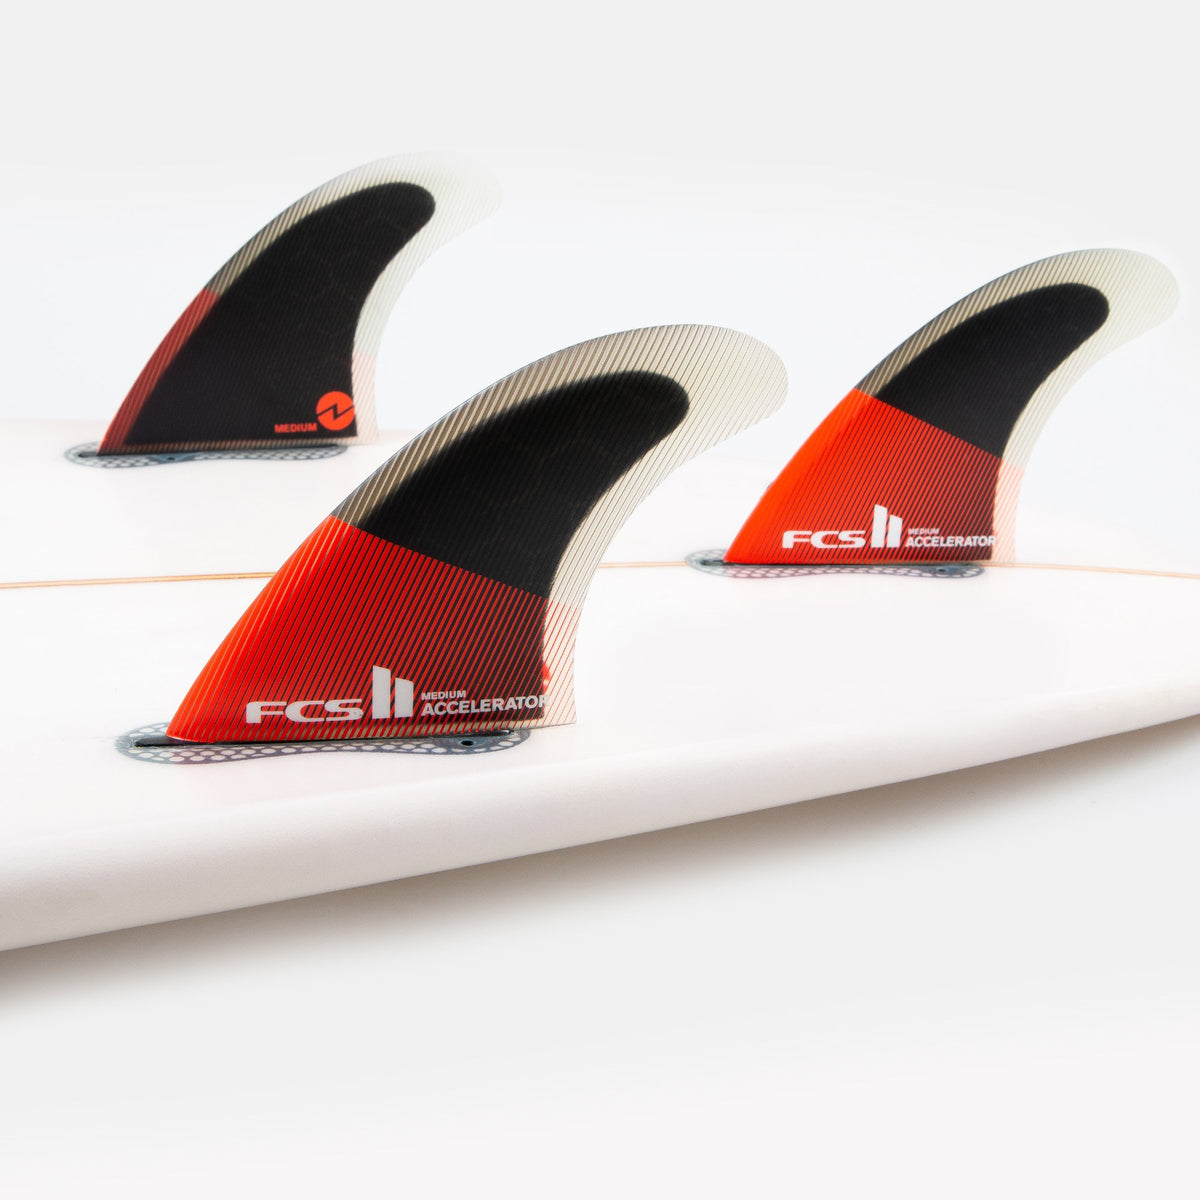 FCS-II-thruster-accelerator-grom-surfboard-fins-red-PC-blacksheepsurf-ireland